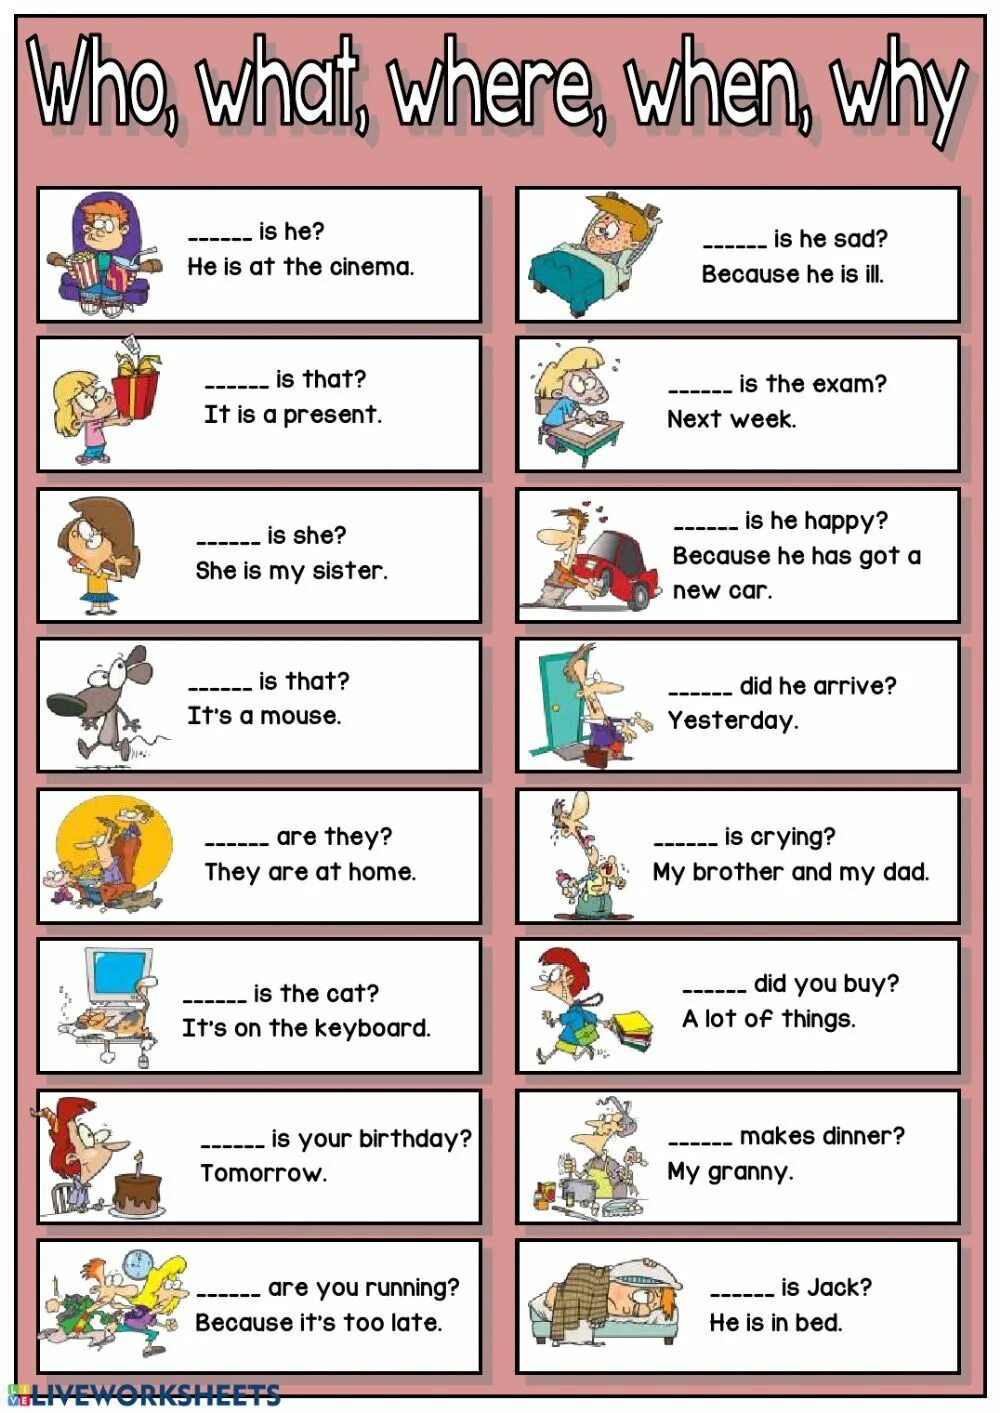 Английский язык warm up. Вопросы Worksheets. WH вопросы Worksheets. Вопросы WH questions. Вопросы Worksheets for Kids.